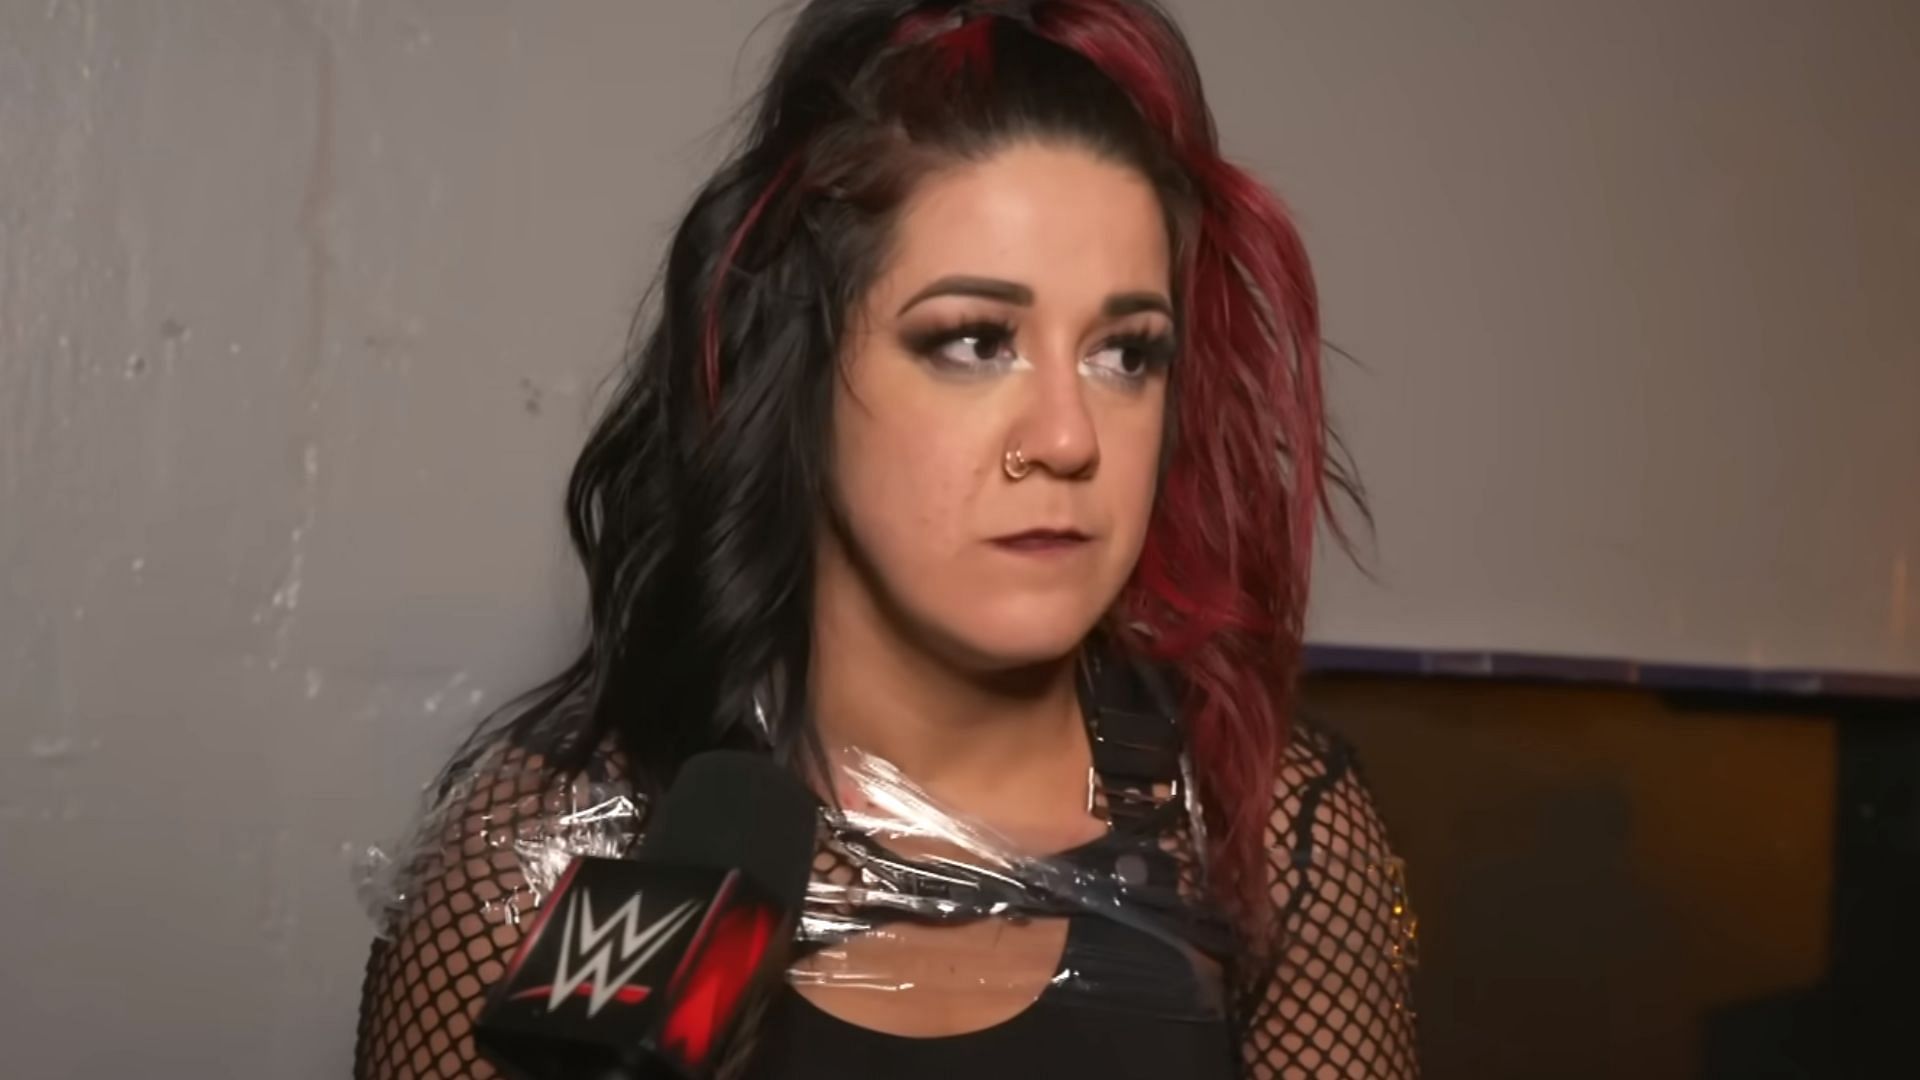 Bayley is a former WWE Women